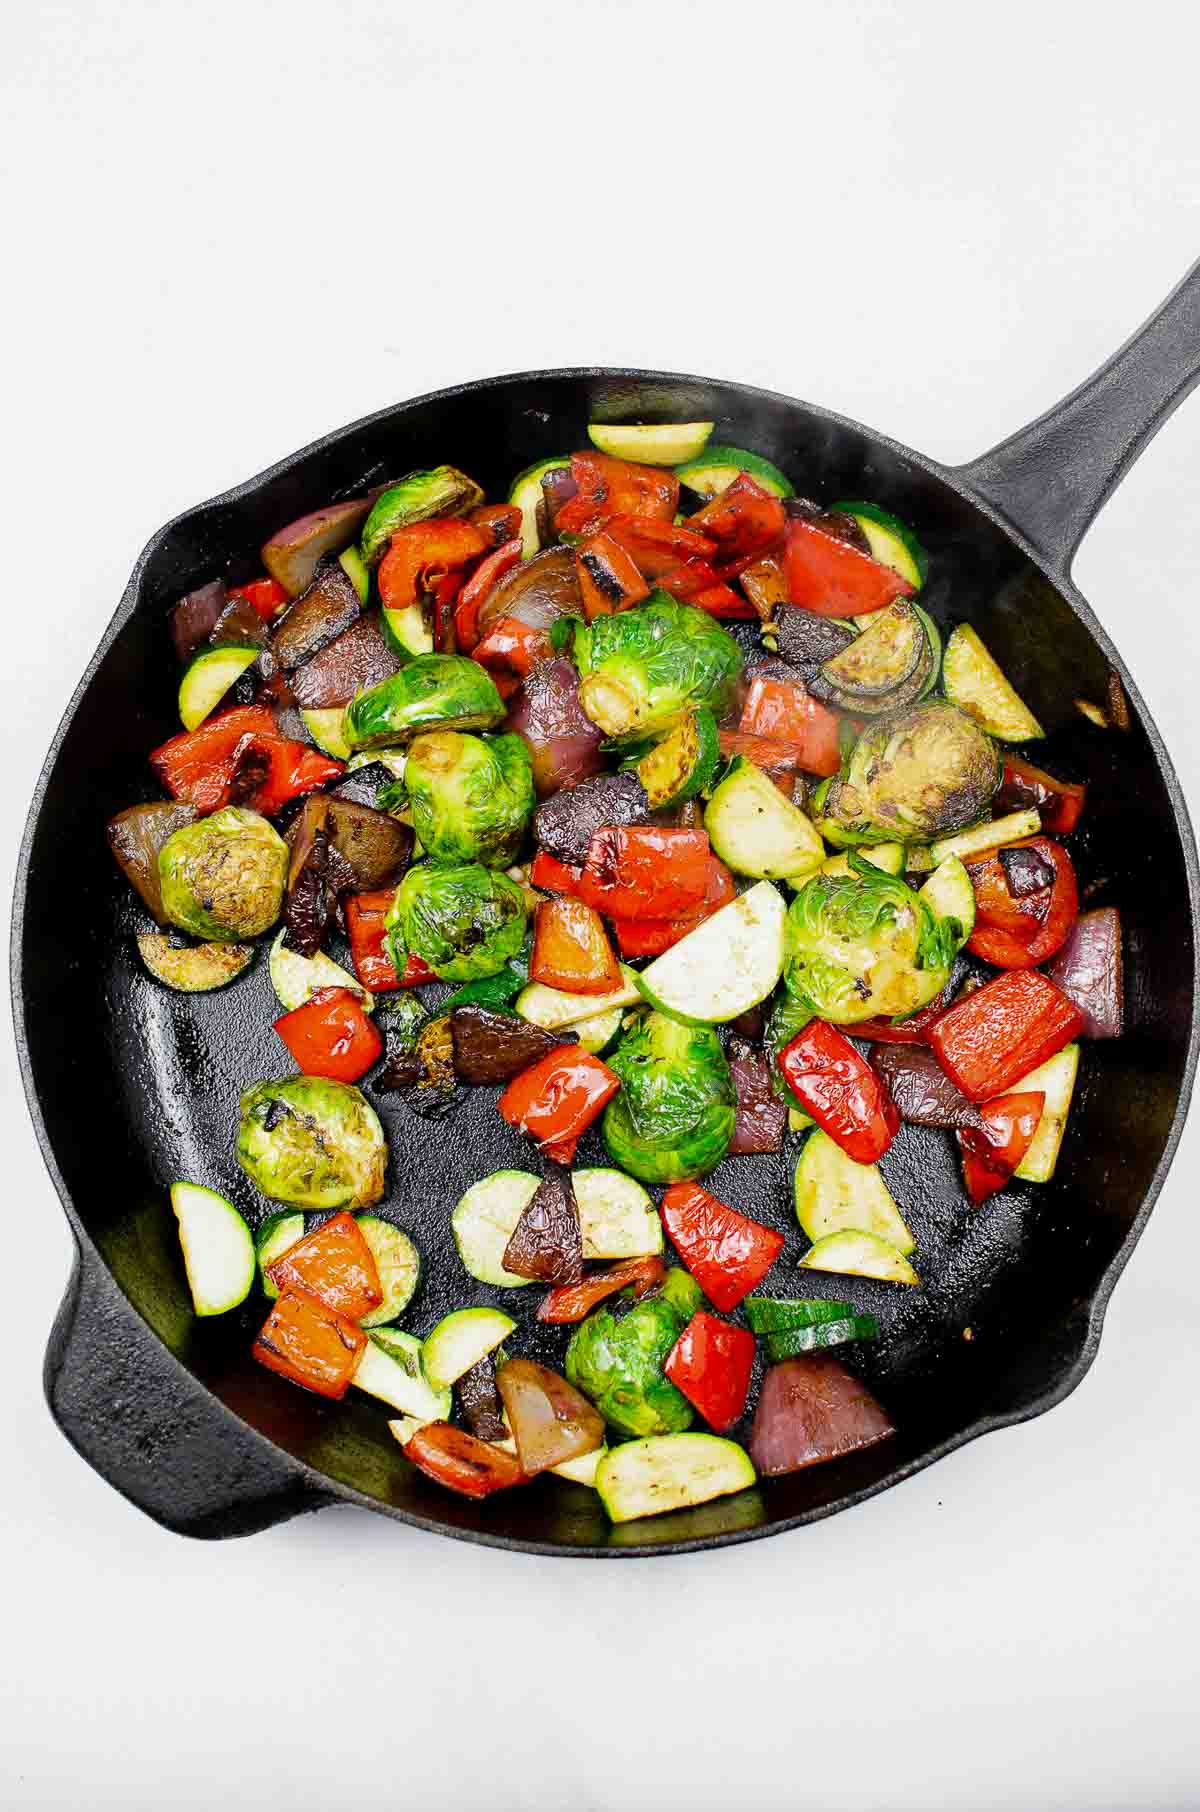 Vegetable stir fried in a cast iron skillet